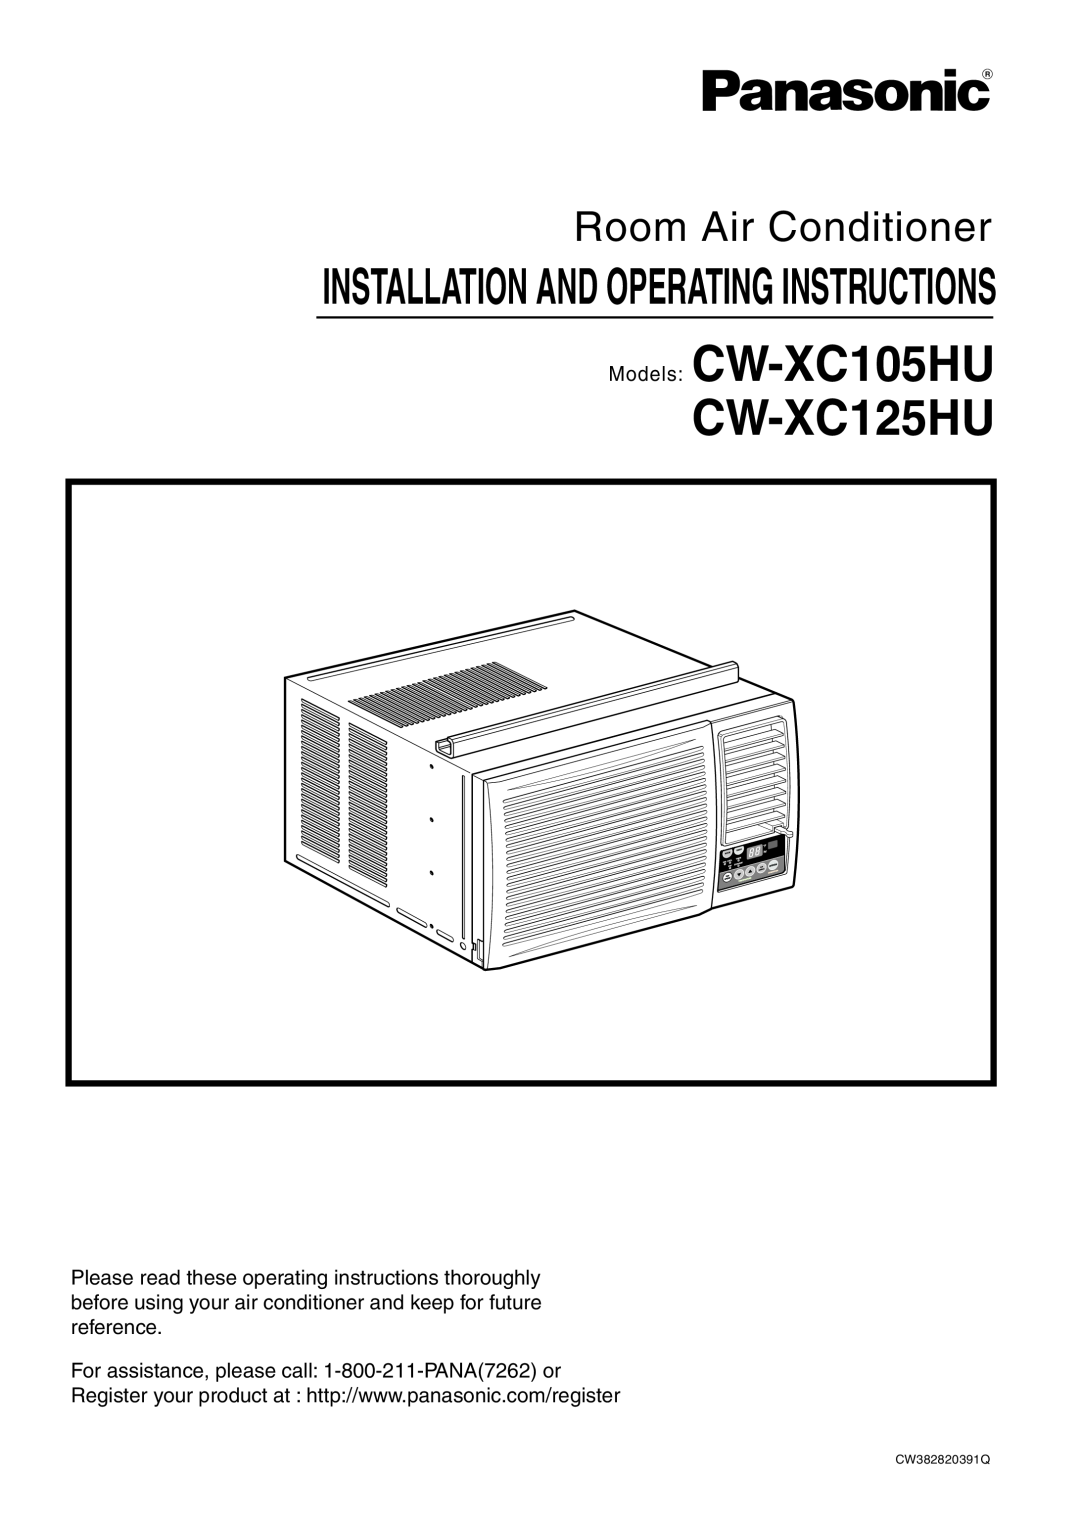 Panasonic operating instructions Models CW-XC105HU CW-XC125HU, Room Air Conditioner 